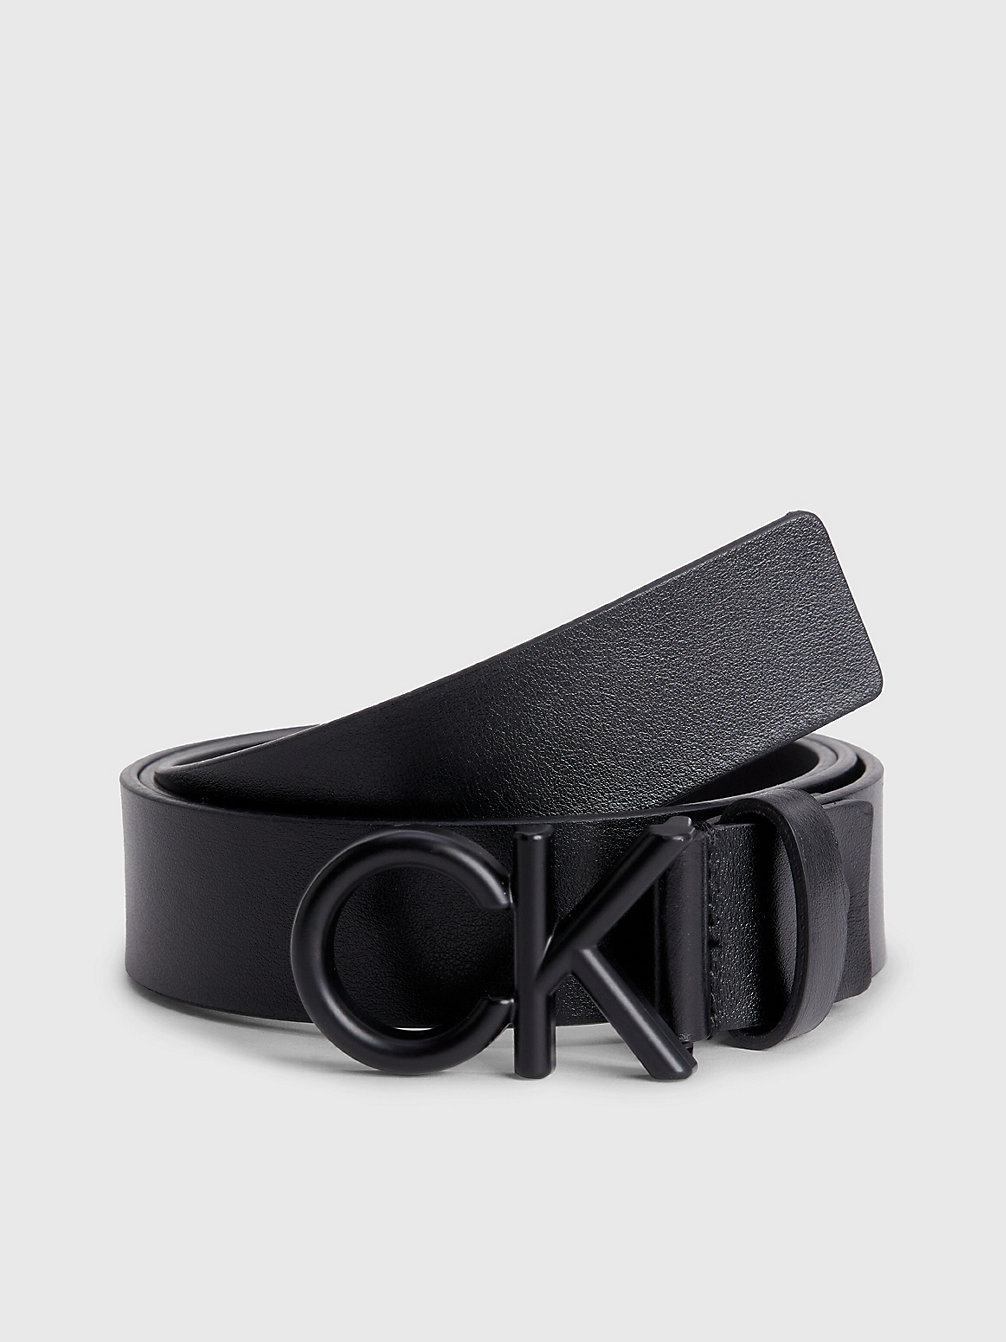 CK BLACK Leather Logo Belt undefined men Calvin Klein